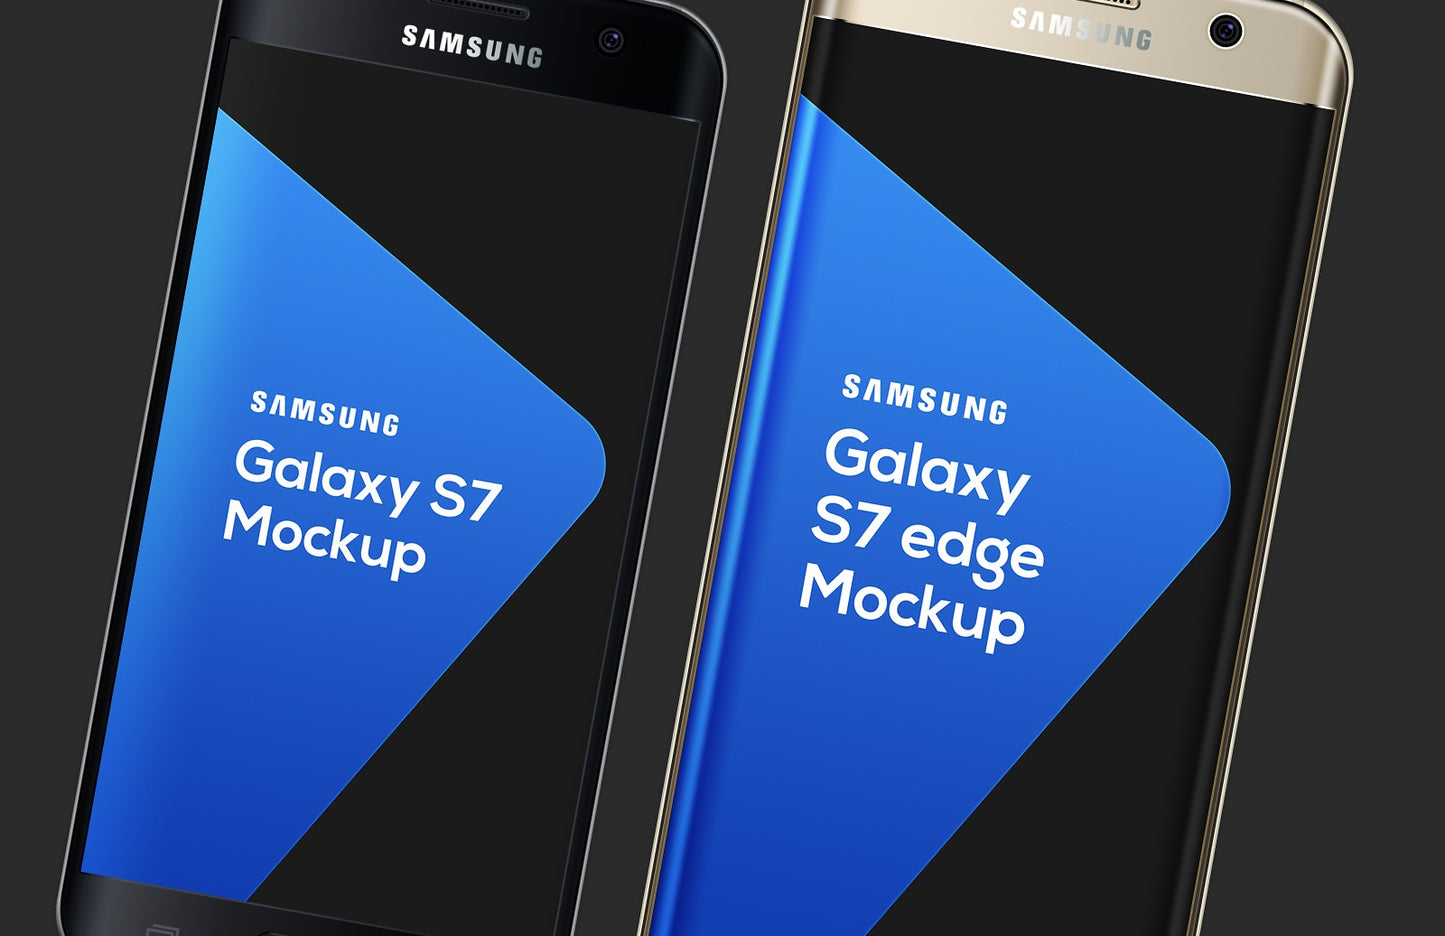 Free Samsung Galaxy S7 and S7 Edge (Mockup)